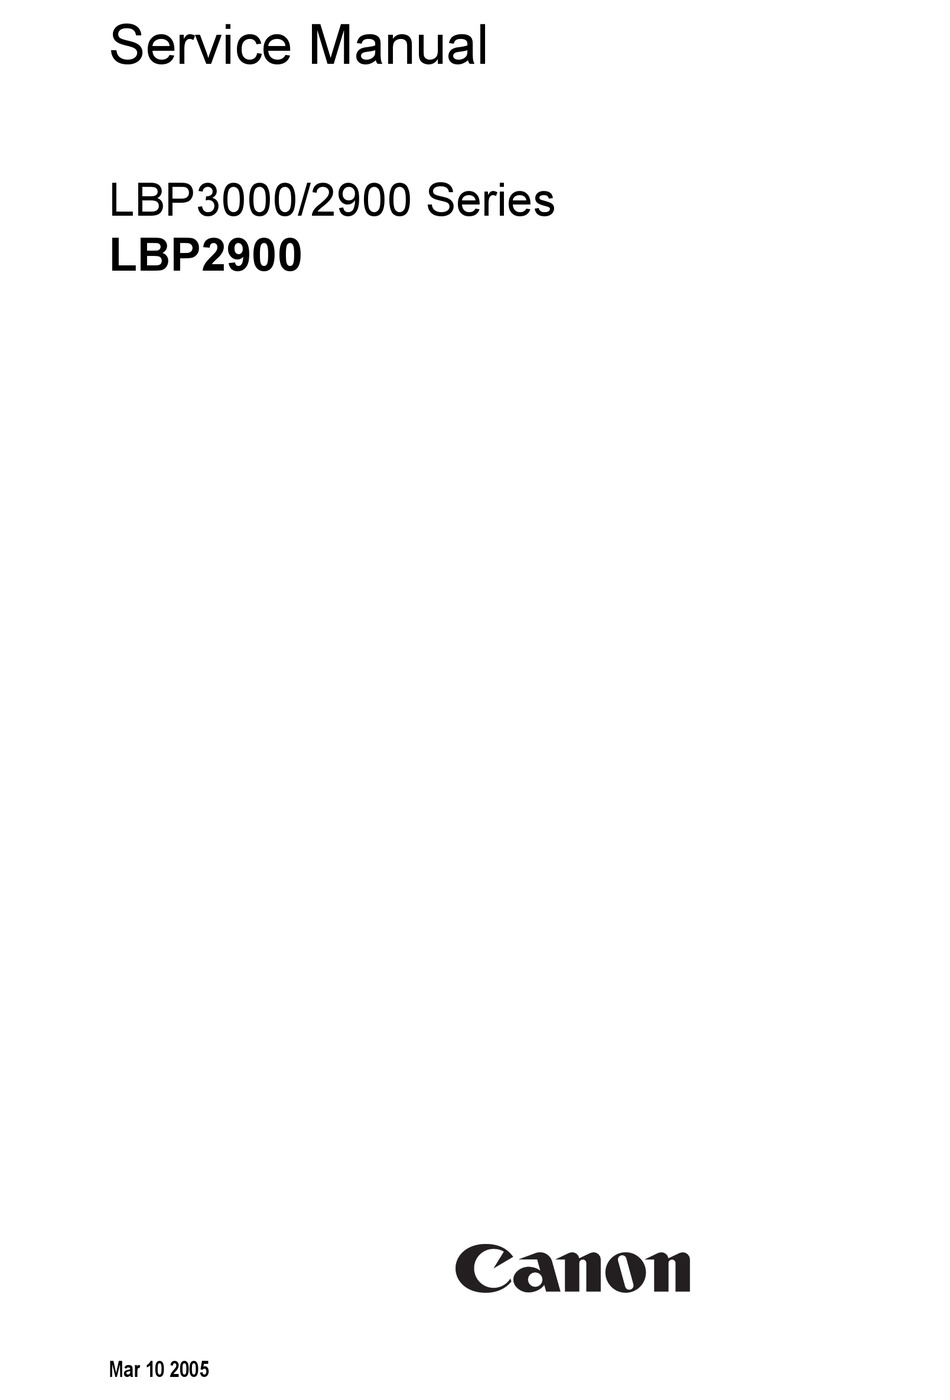 CANON LBP2900 SERIES SERVICE MANUAL Pdf Download | ManualsLib